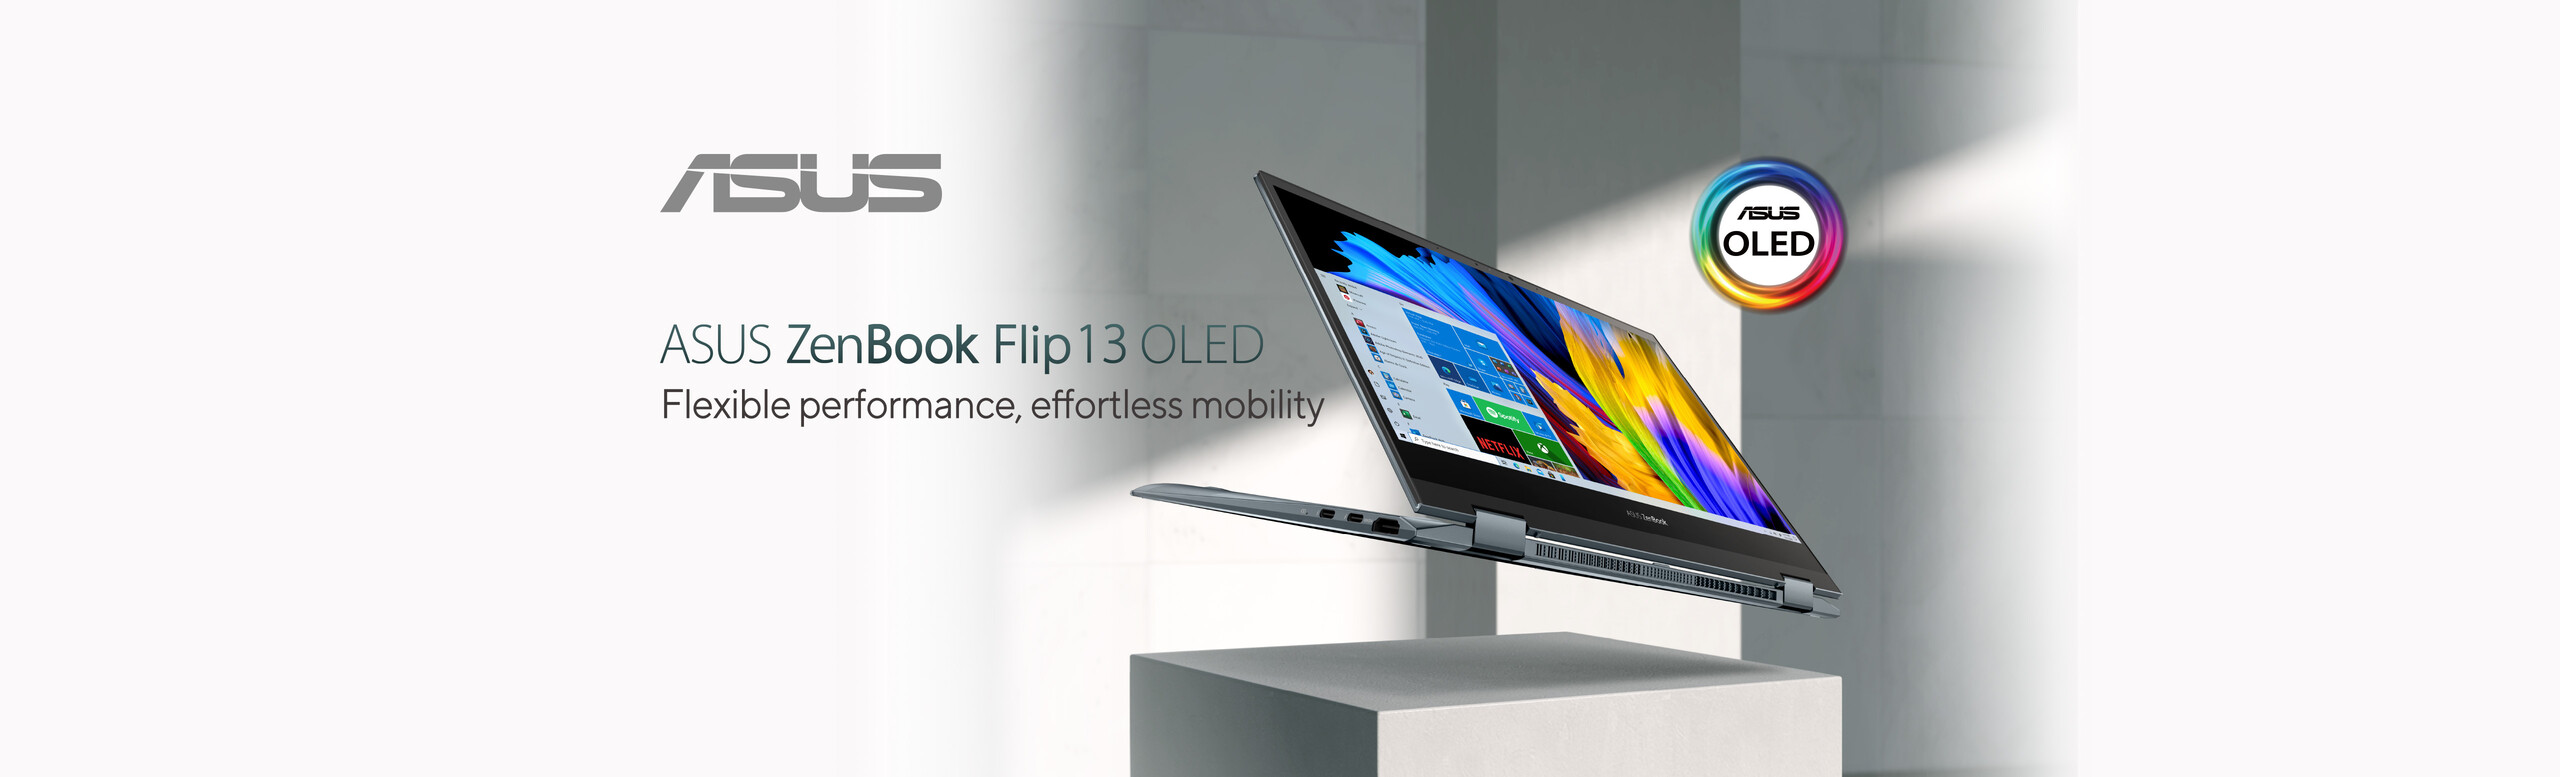 ZenBook Flip 13 OLED (UX363, 11th Gen Intel)